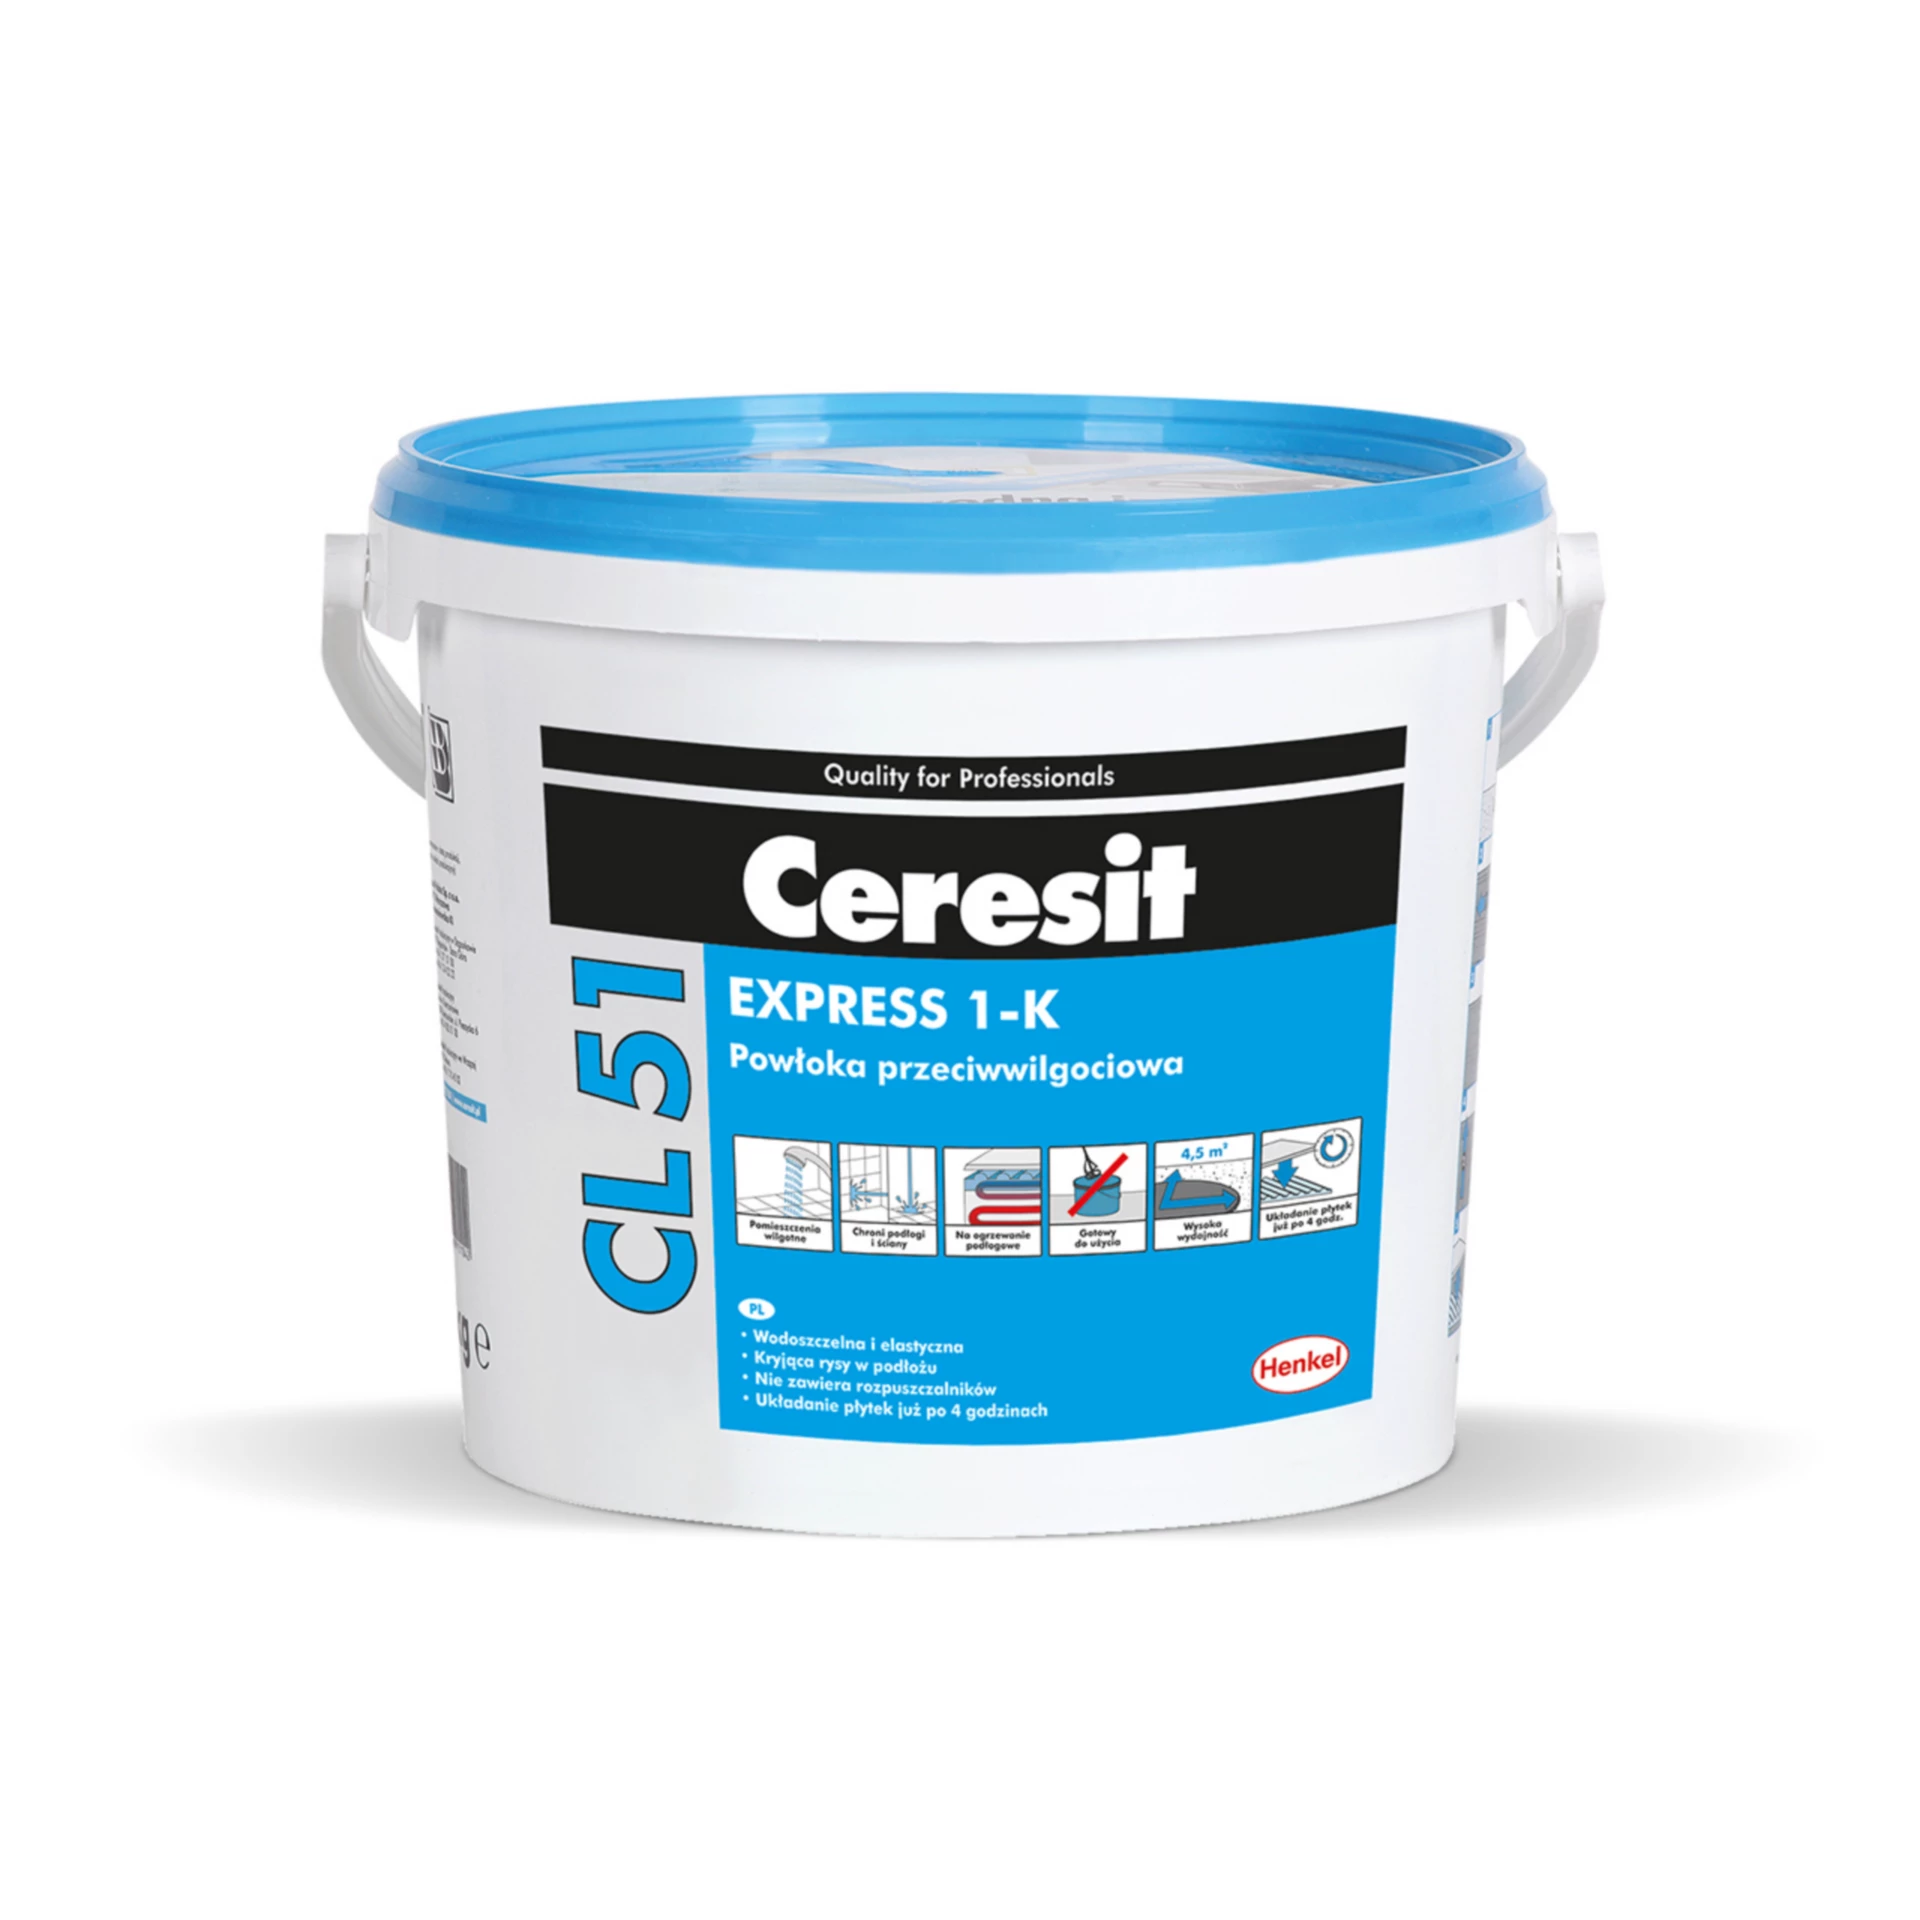 Ceresit CL51  Liquid Foi. Στεγανοποίηση ενός συστατικού κάτω από πλακίδια 15kg